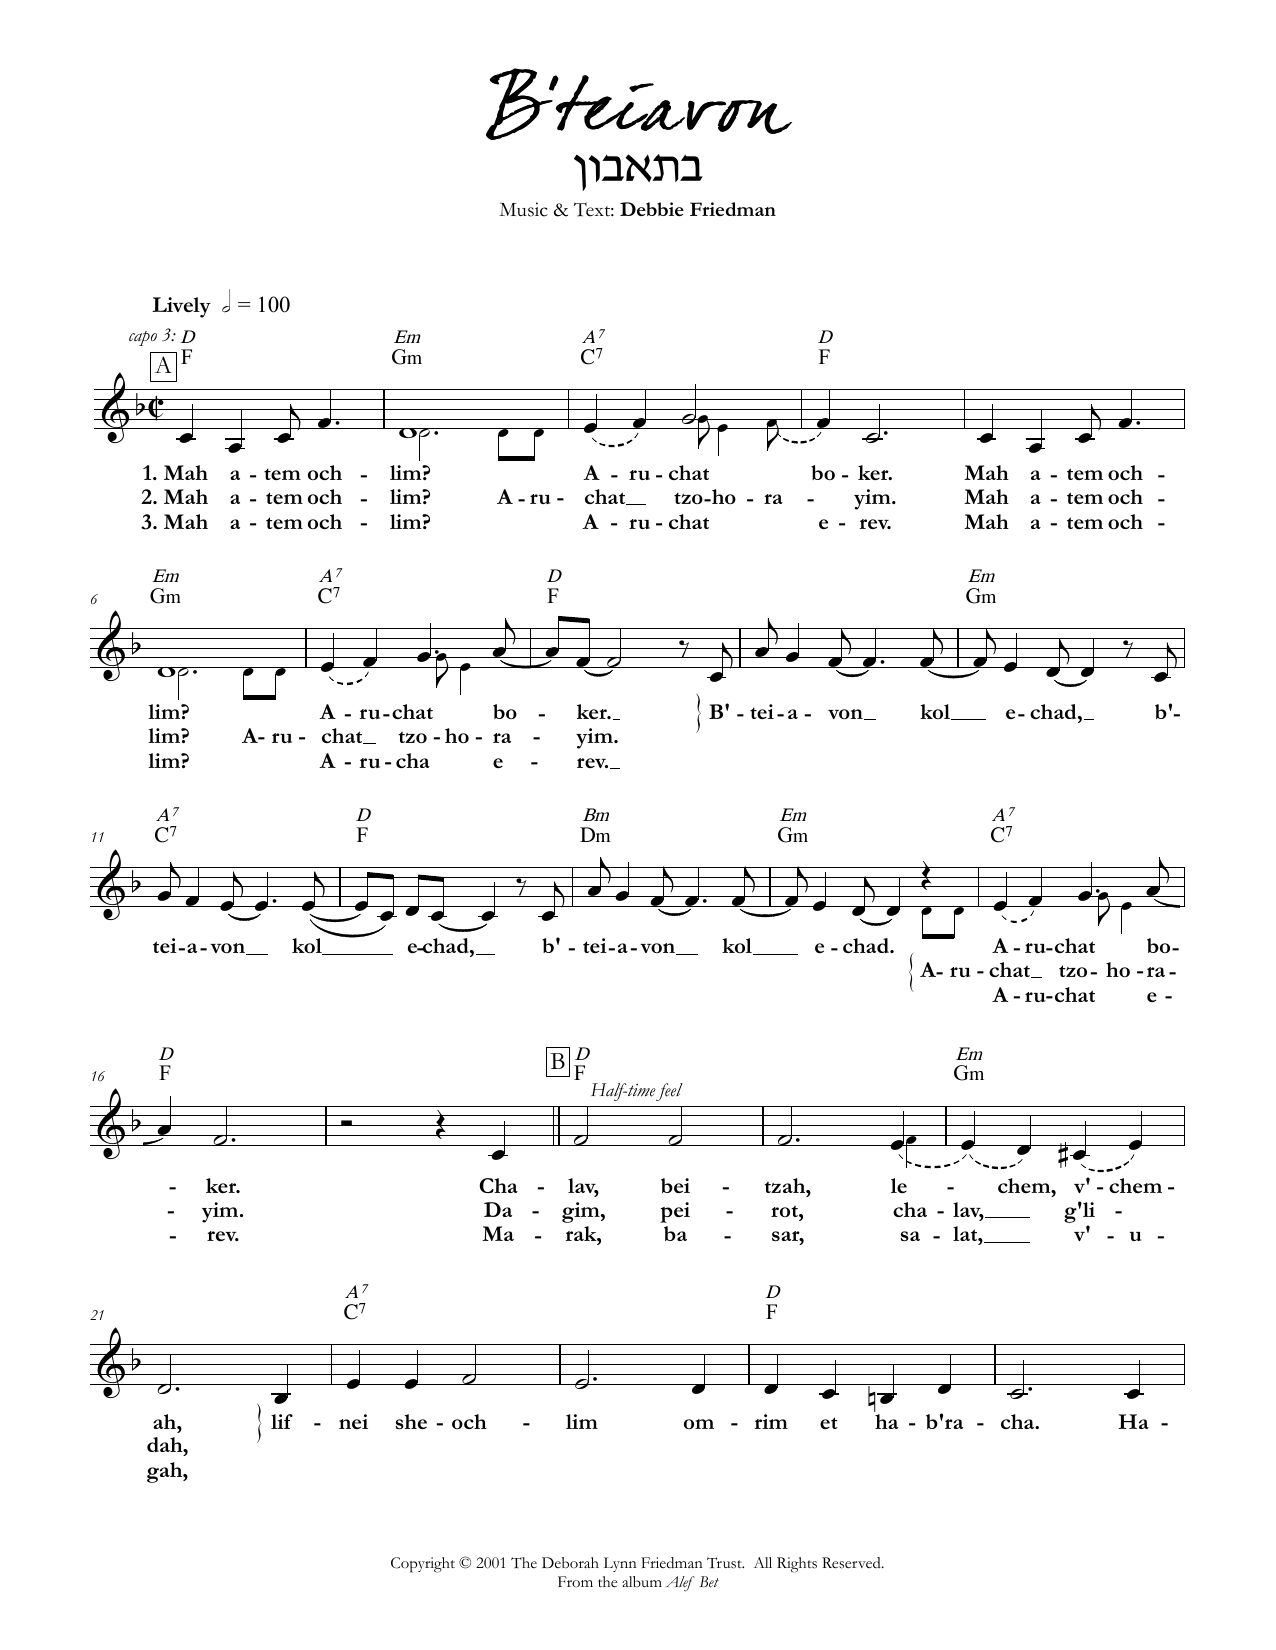 Debbie Friedman B'teiavon Sheet Music Notes & Chords for Lead Sheet / Fake Book - Download or Print PDF